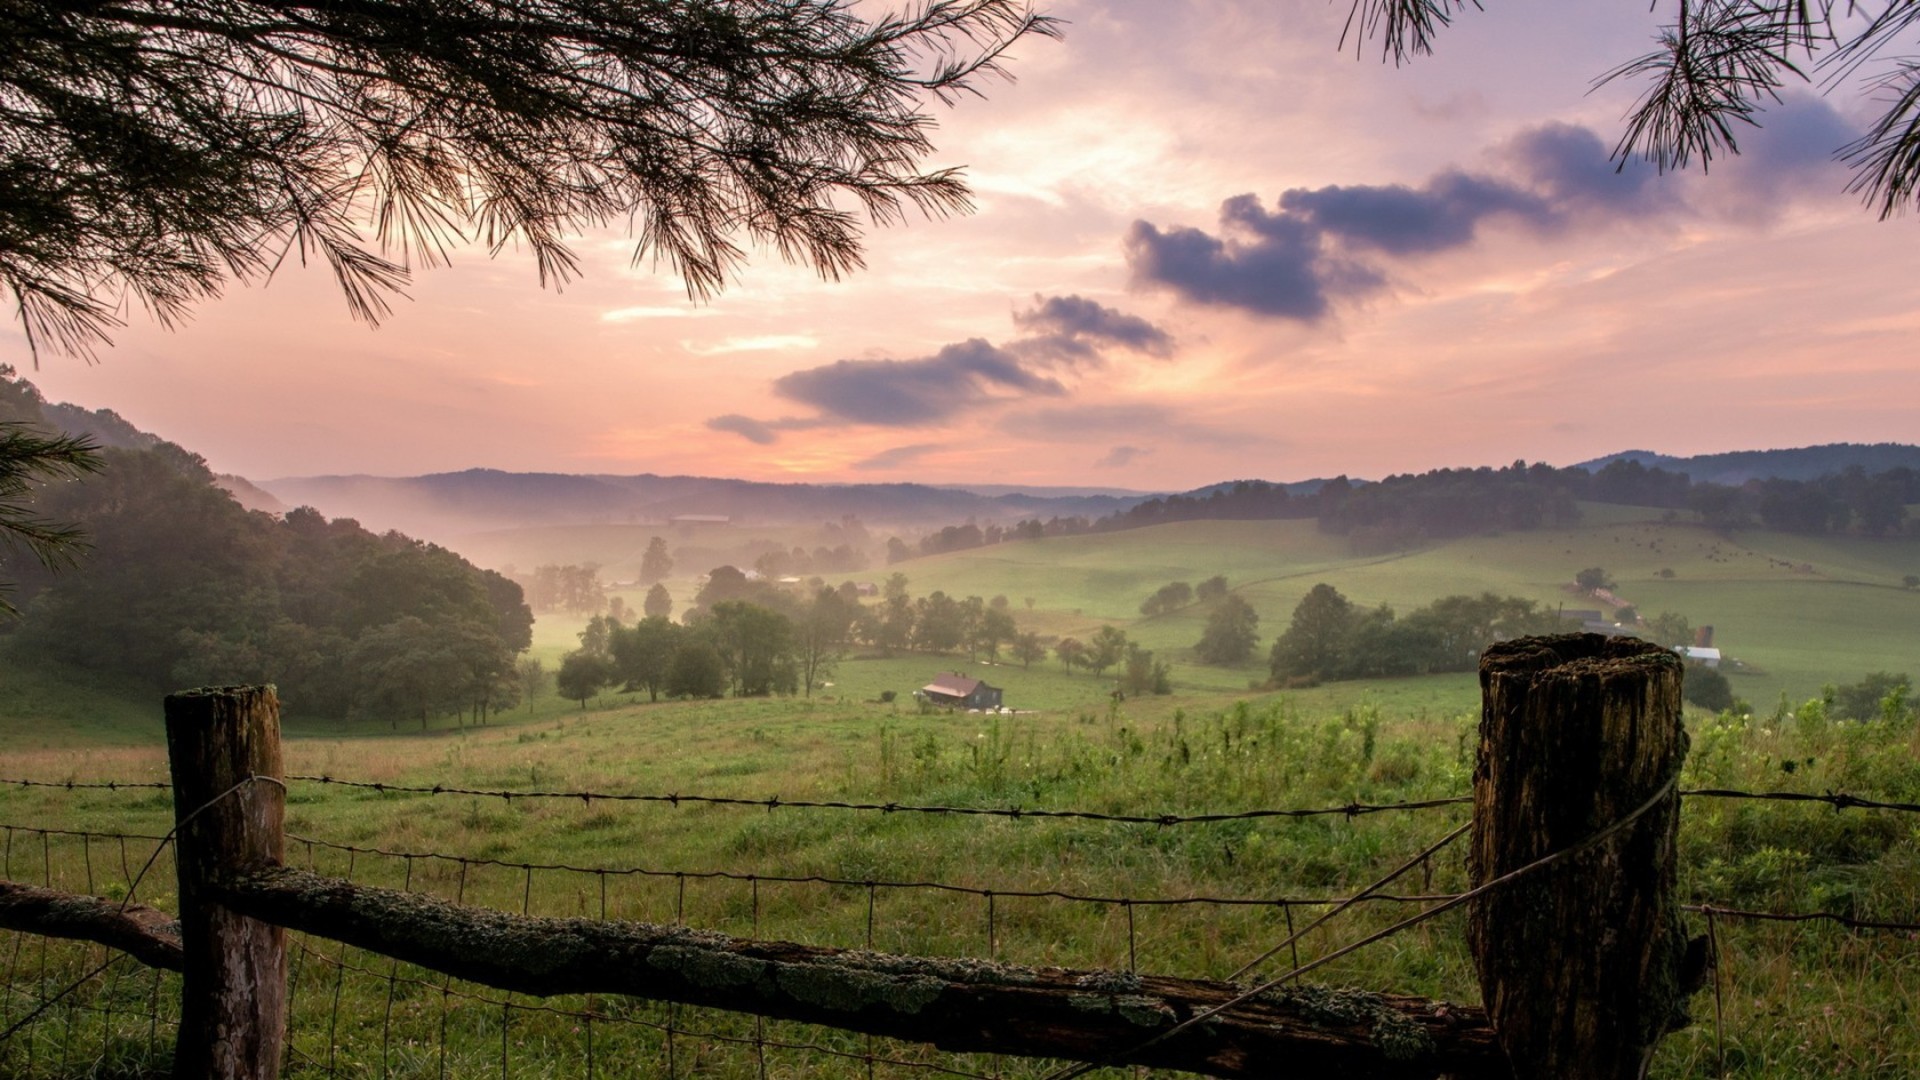 1920x1080 Wonderful Farms In The Valley In Morning Mist HD Desktop Background  wallpaper free